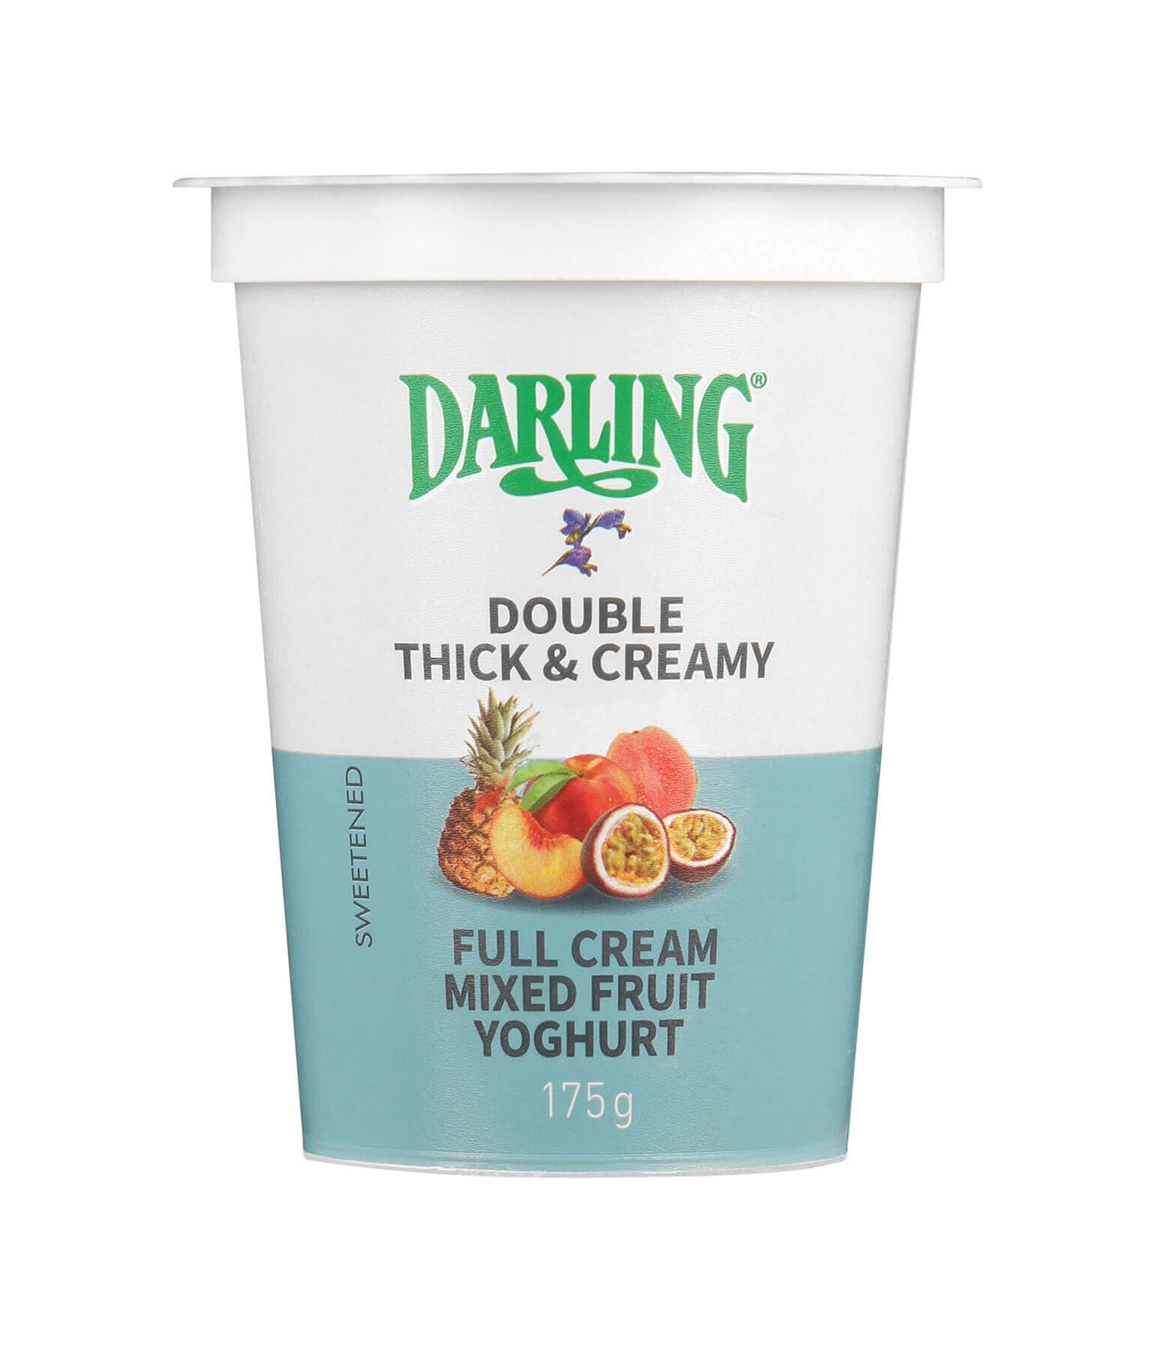 Darling Mixed Fruit Fruit Full Cream Yoghurt 175g